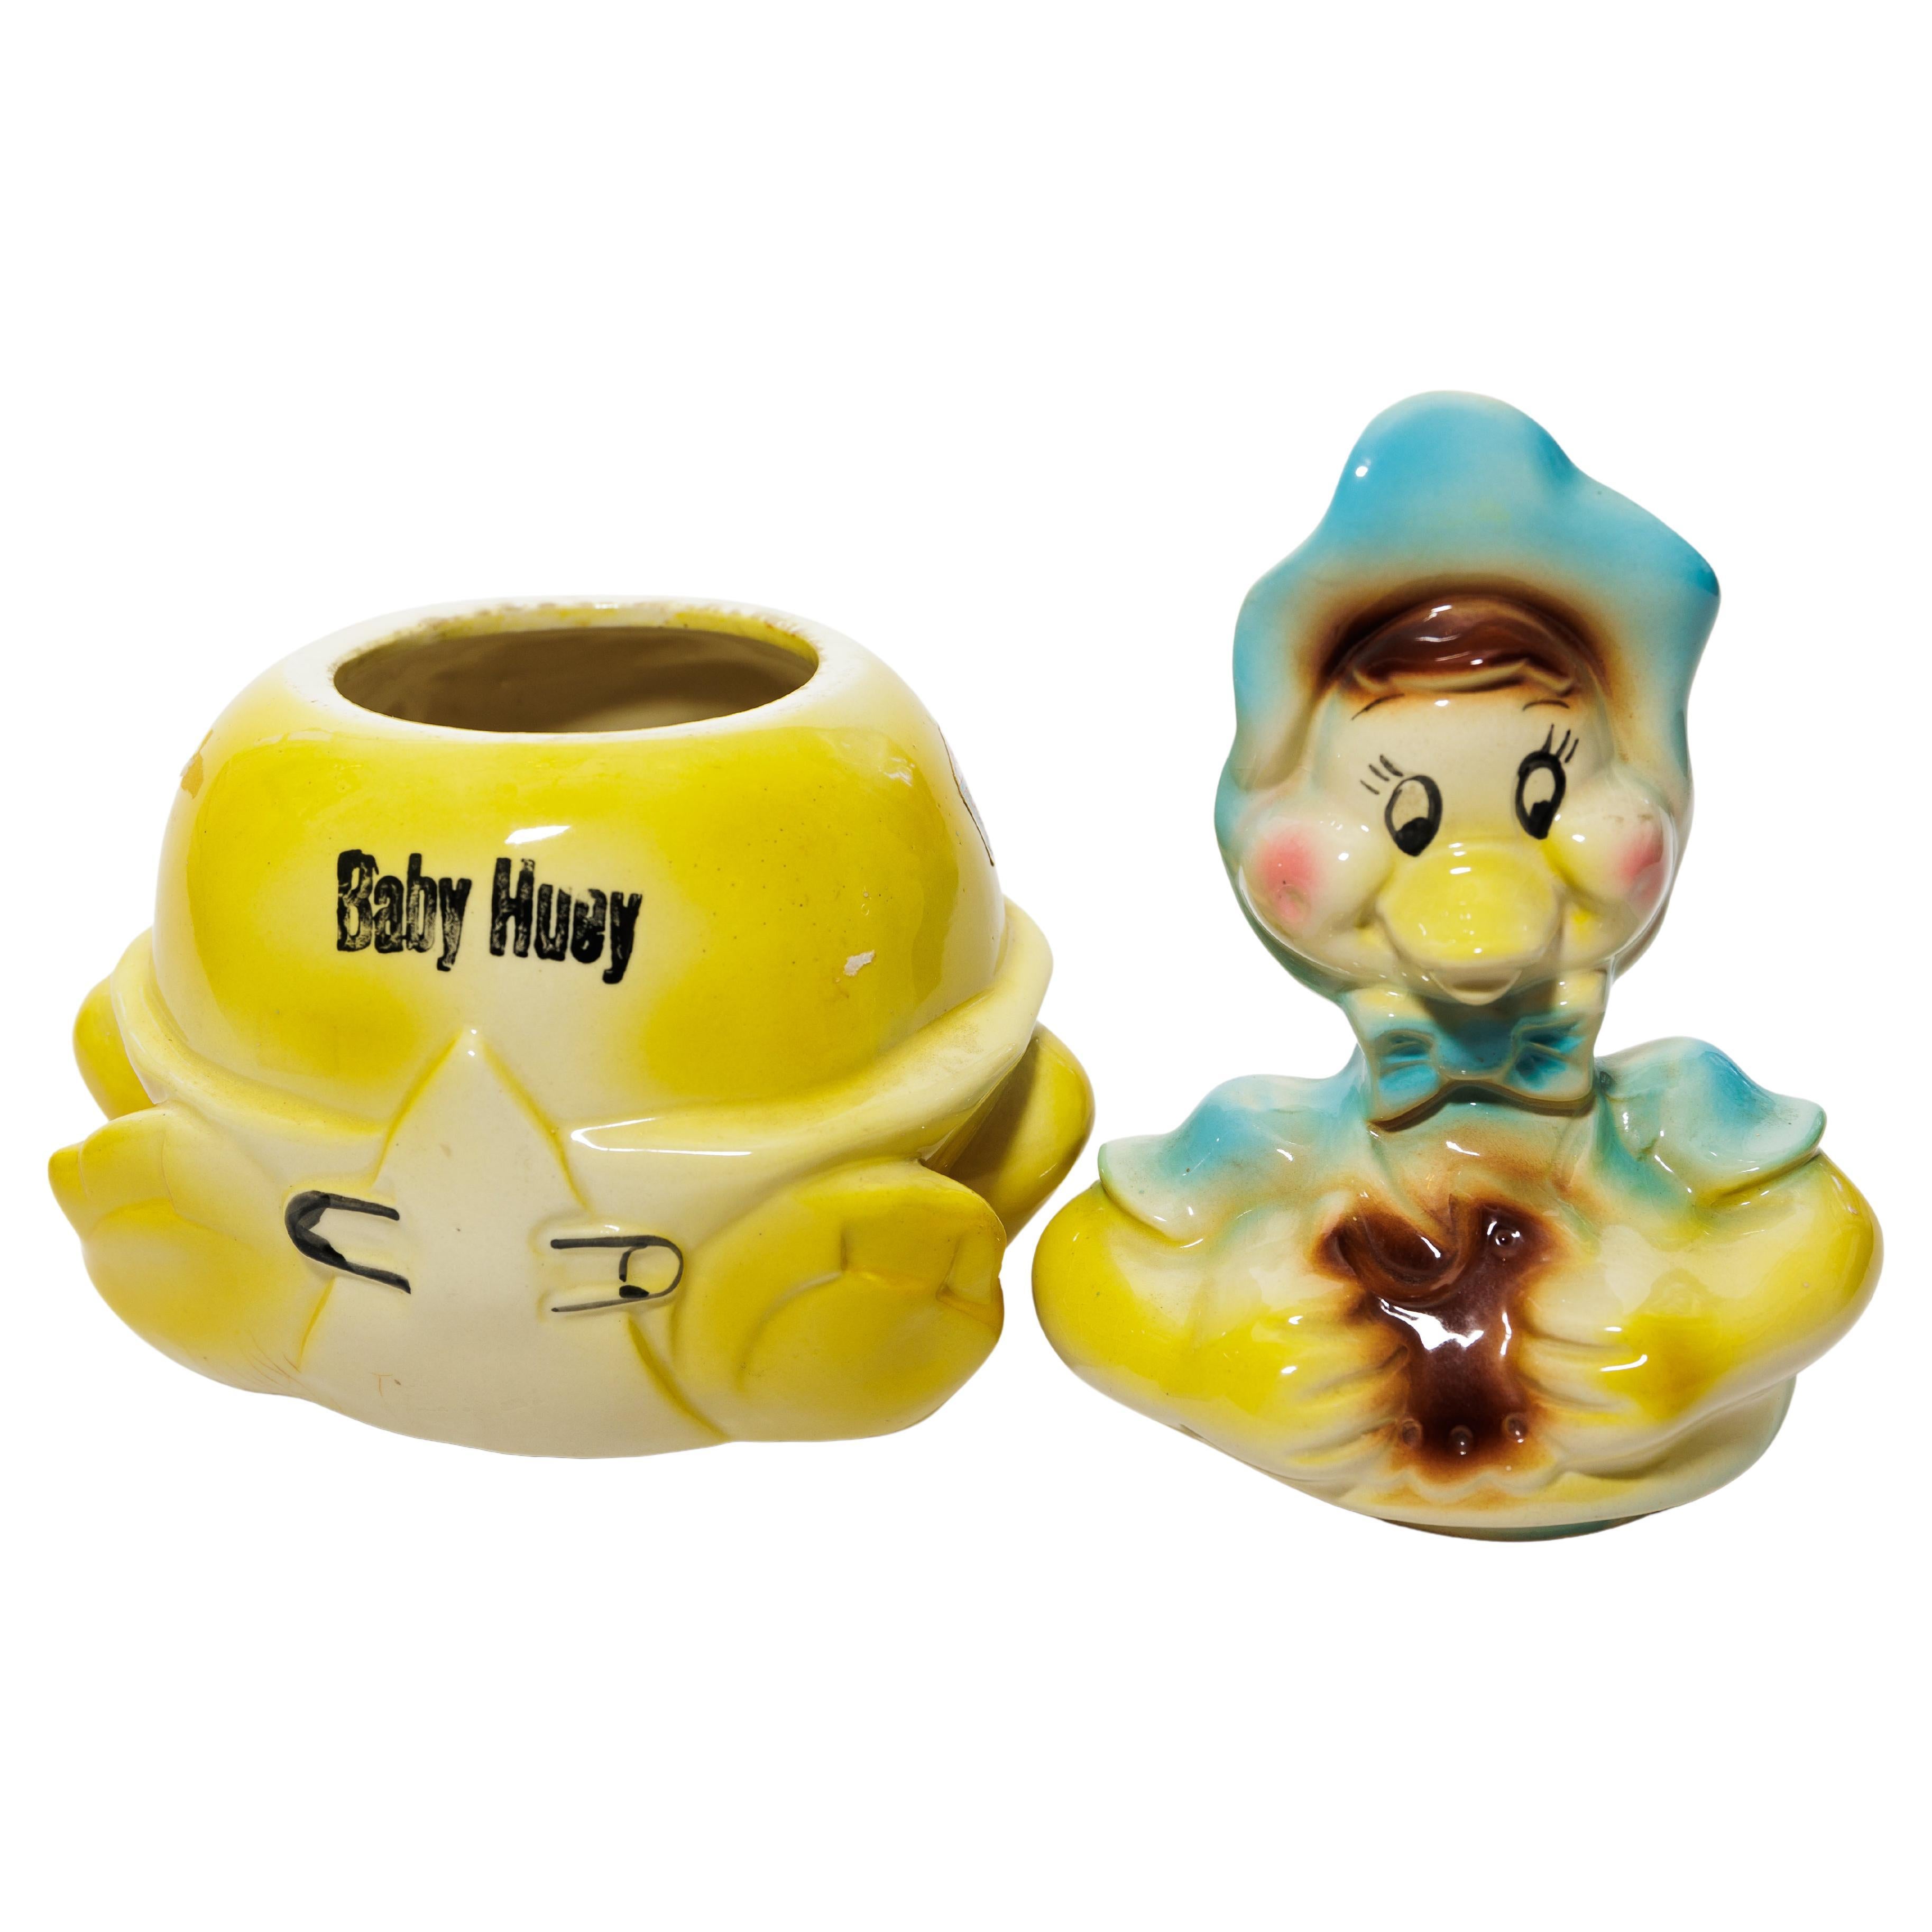 "Baby Huey" Cookie Jar For Sale